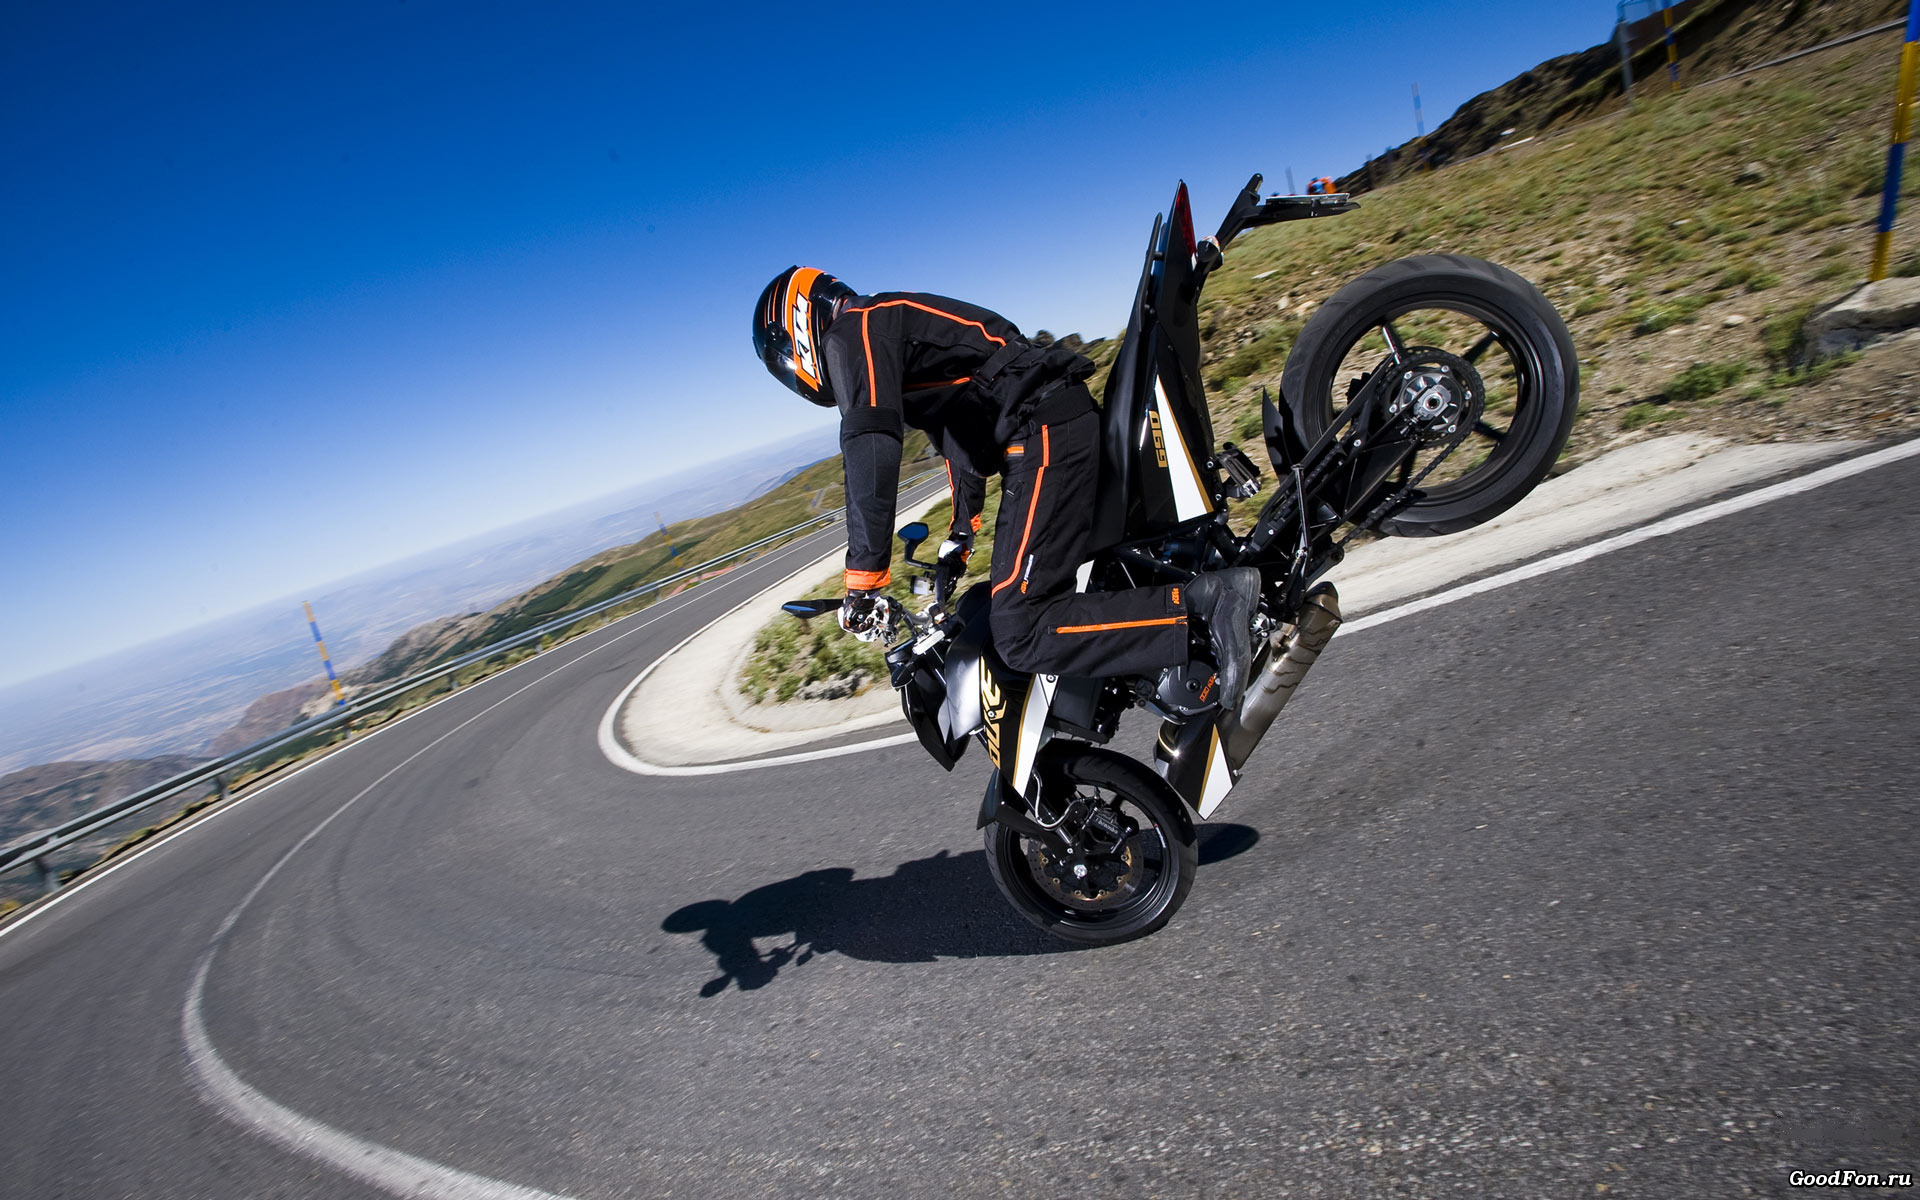 Road Bike Desktop Wallpaper Bikes Stunts Motorcycles